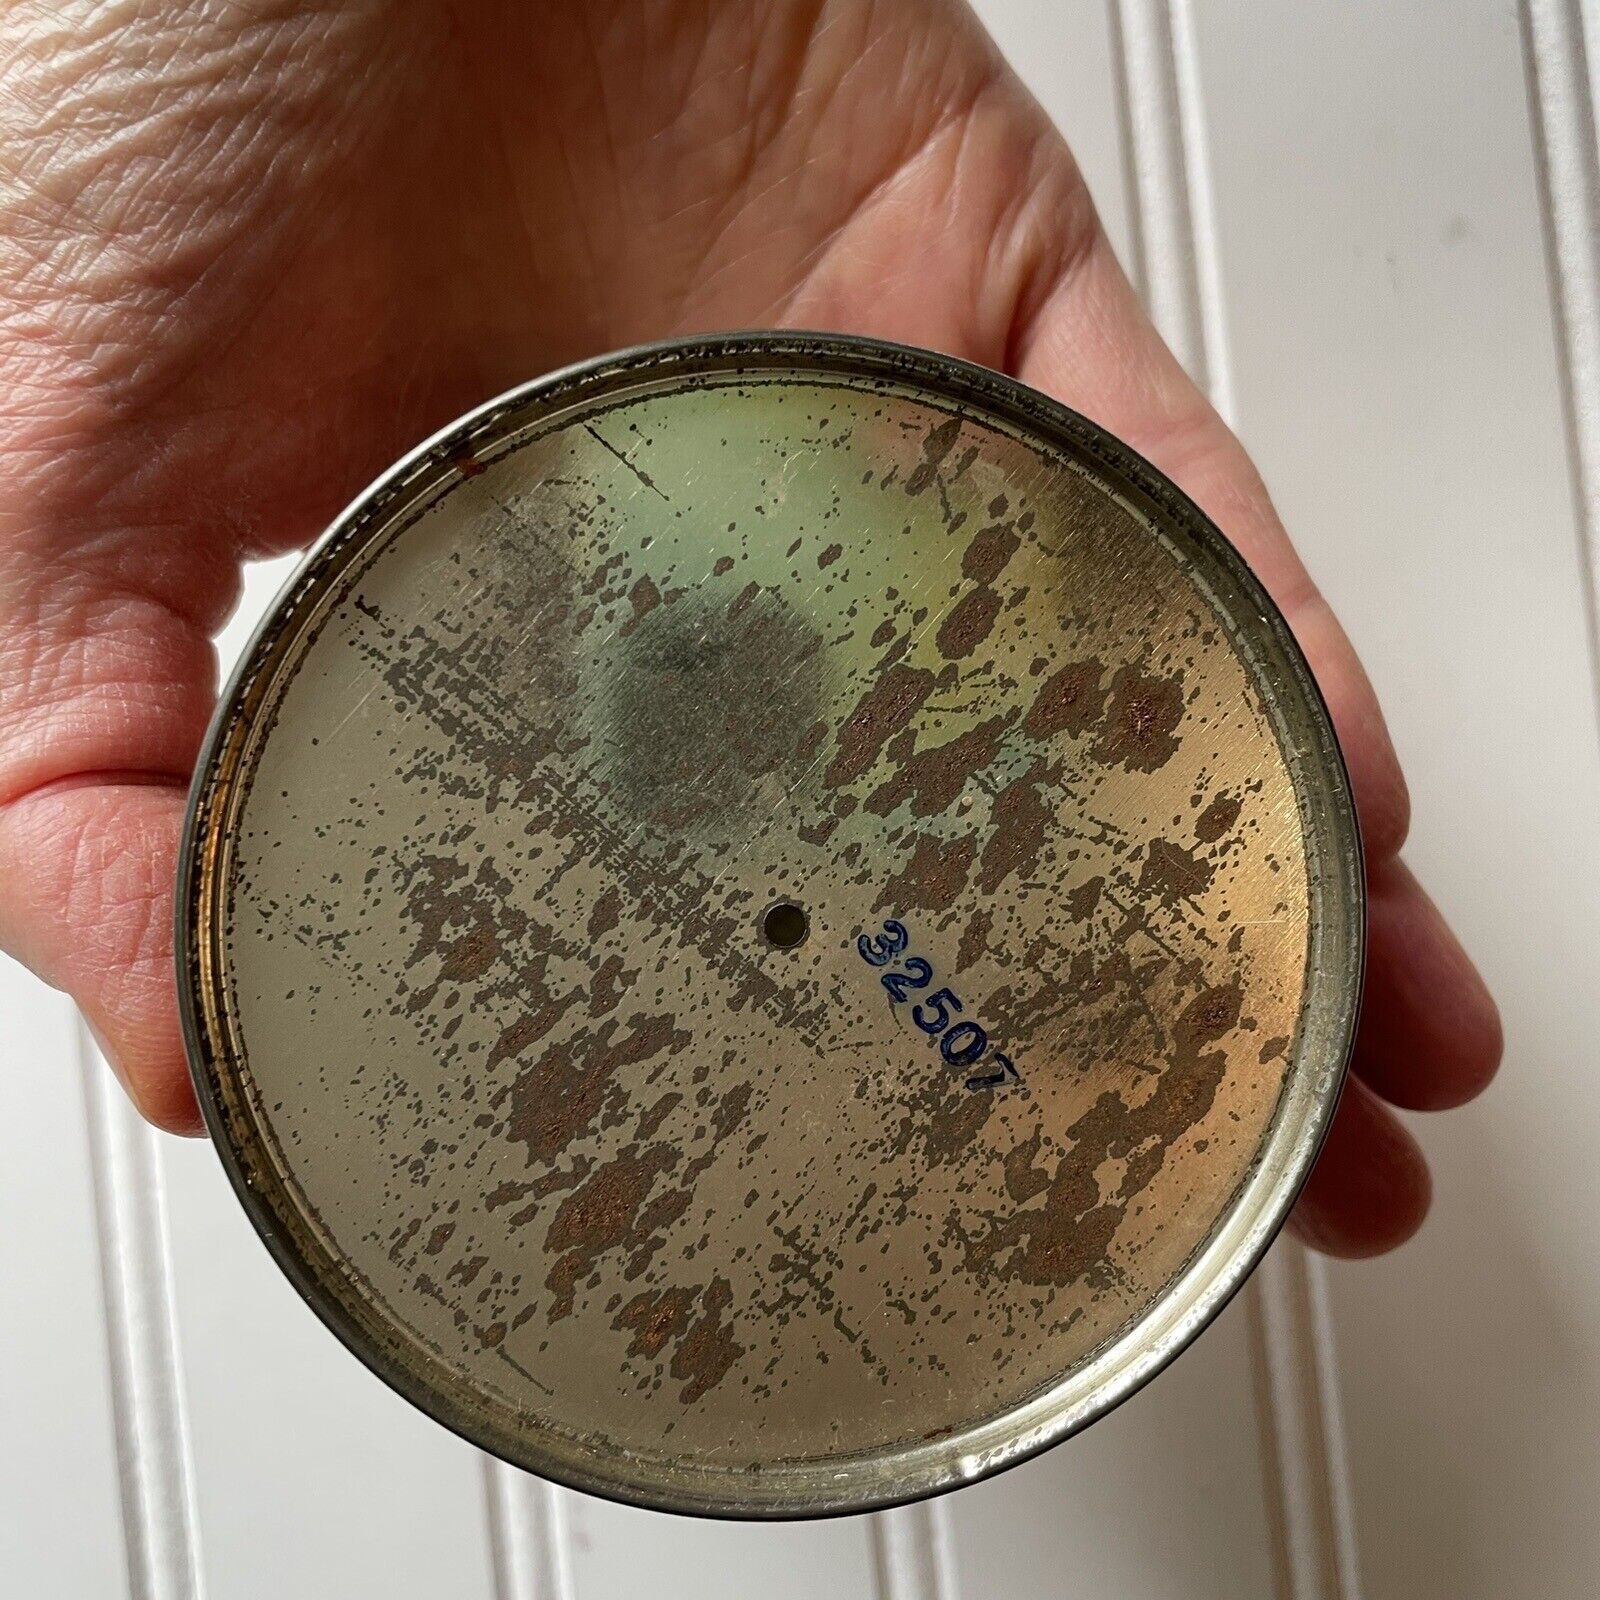 Vintage Avon Wild Country Gift Soap Trinket Tin Box Fragrance Man Cave Decor Без бренда - фотография #19